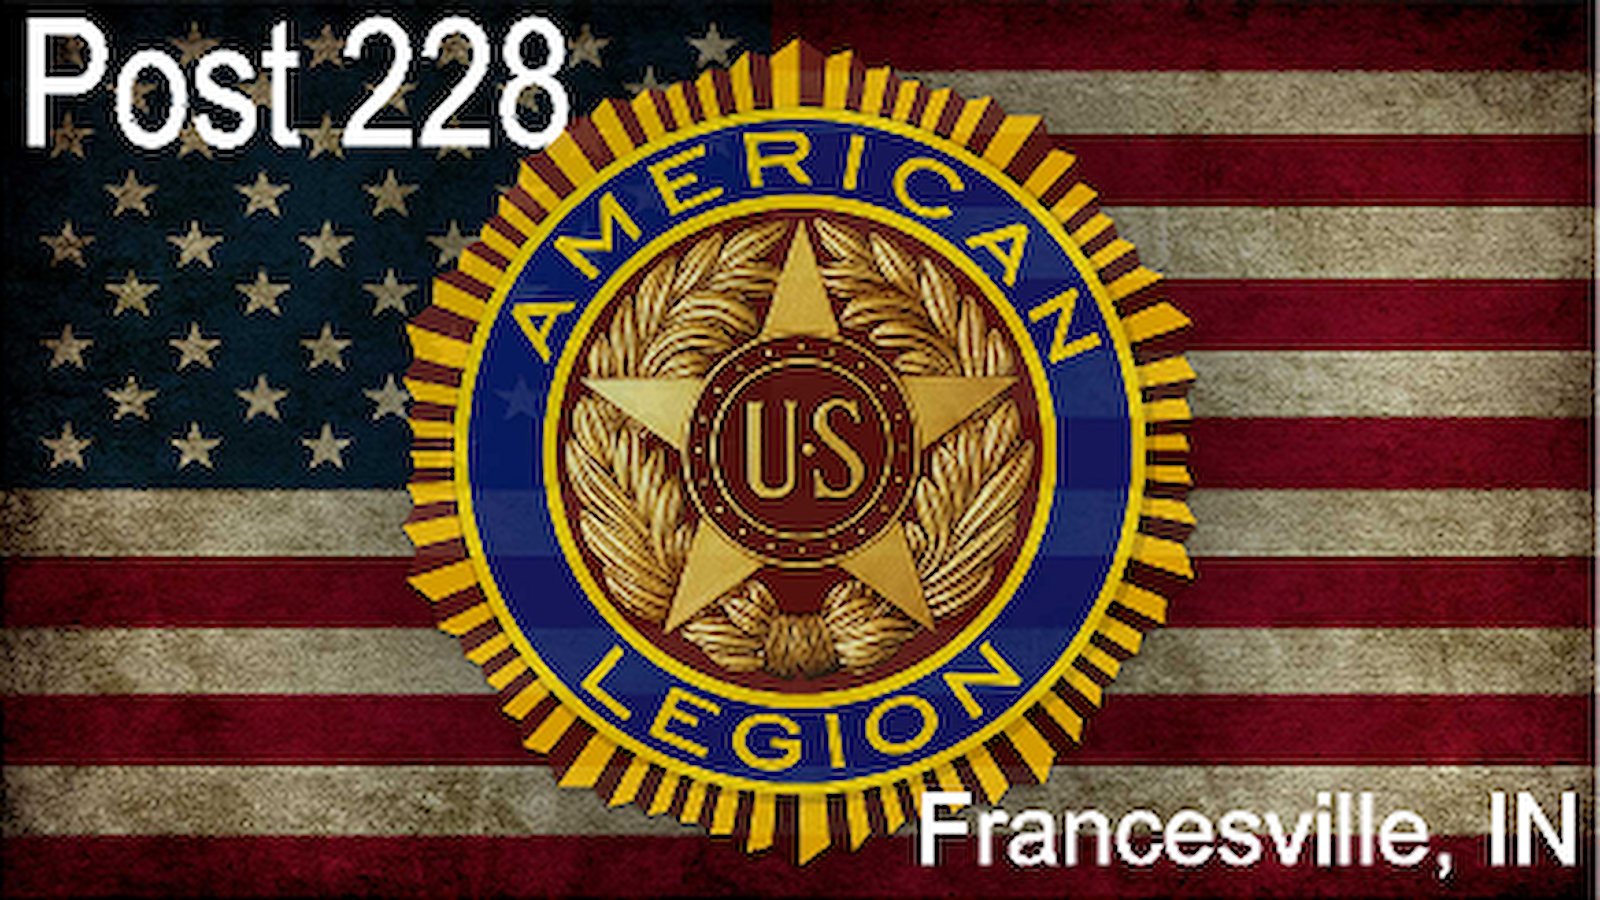 American Legion Post #228